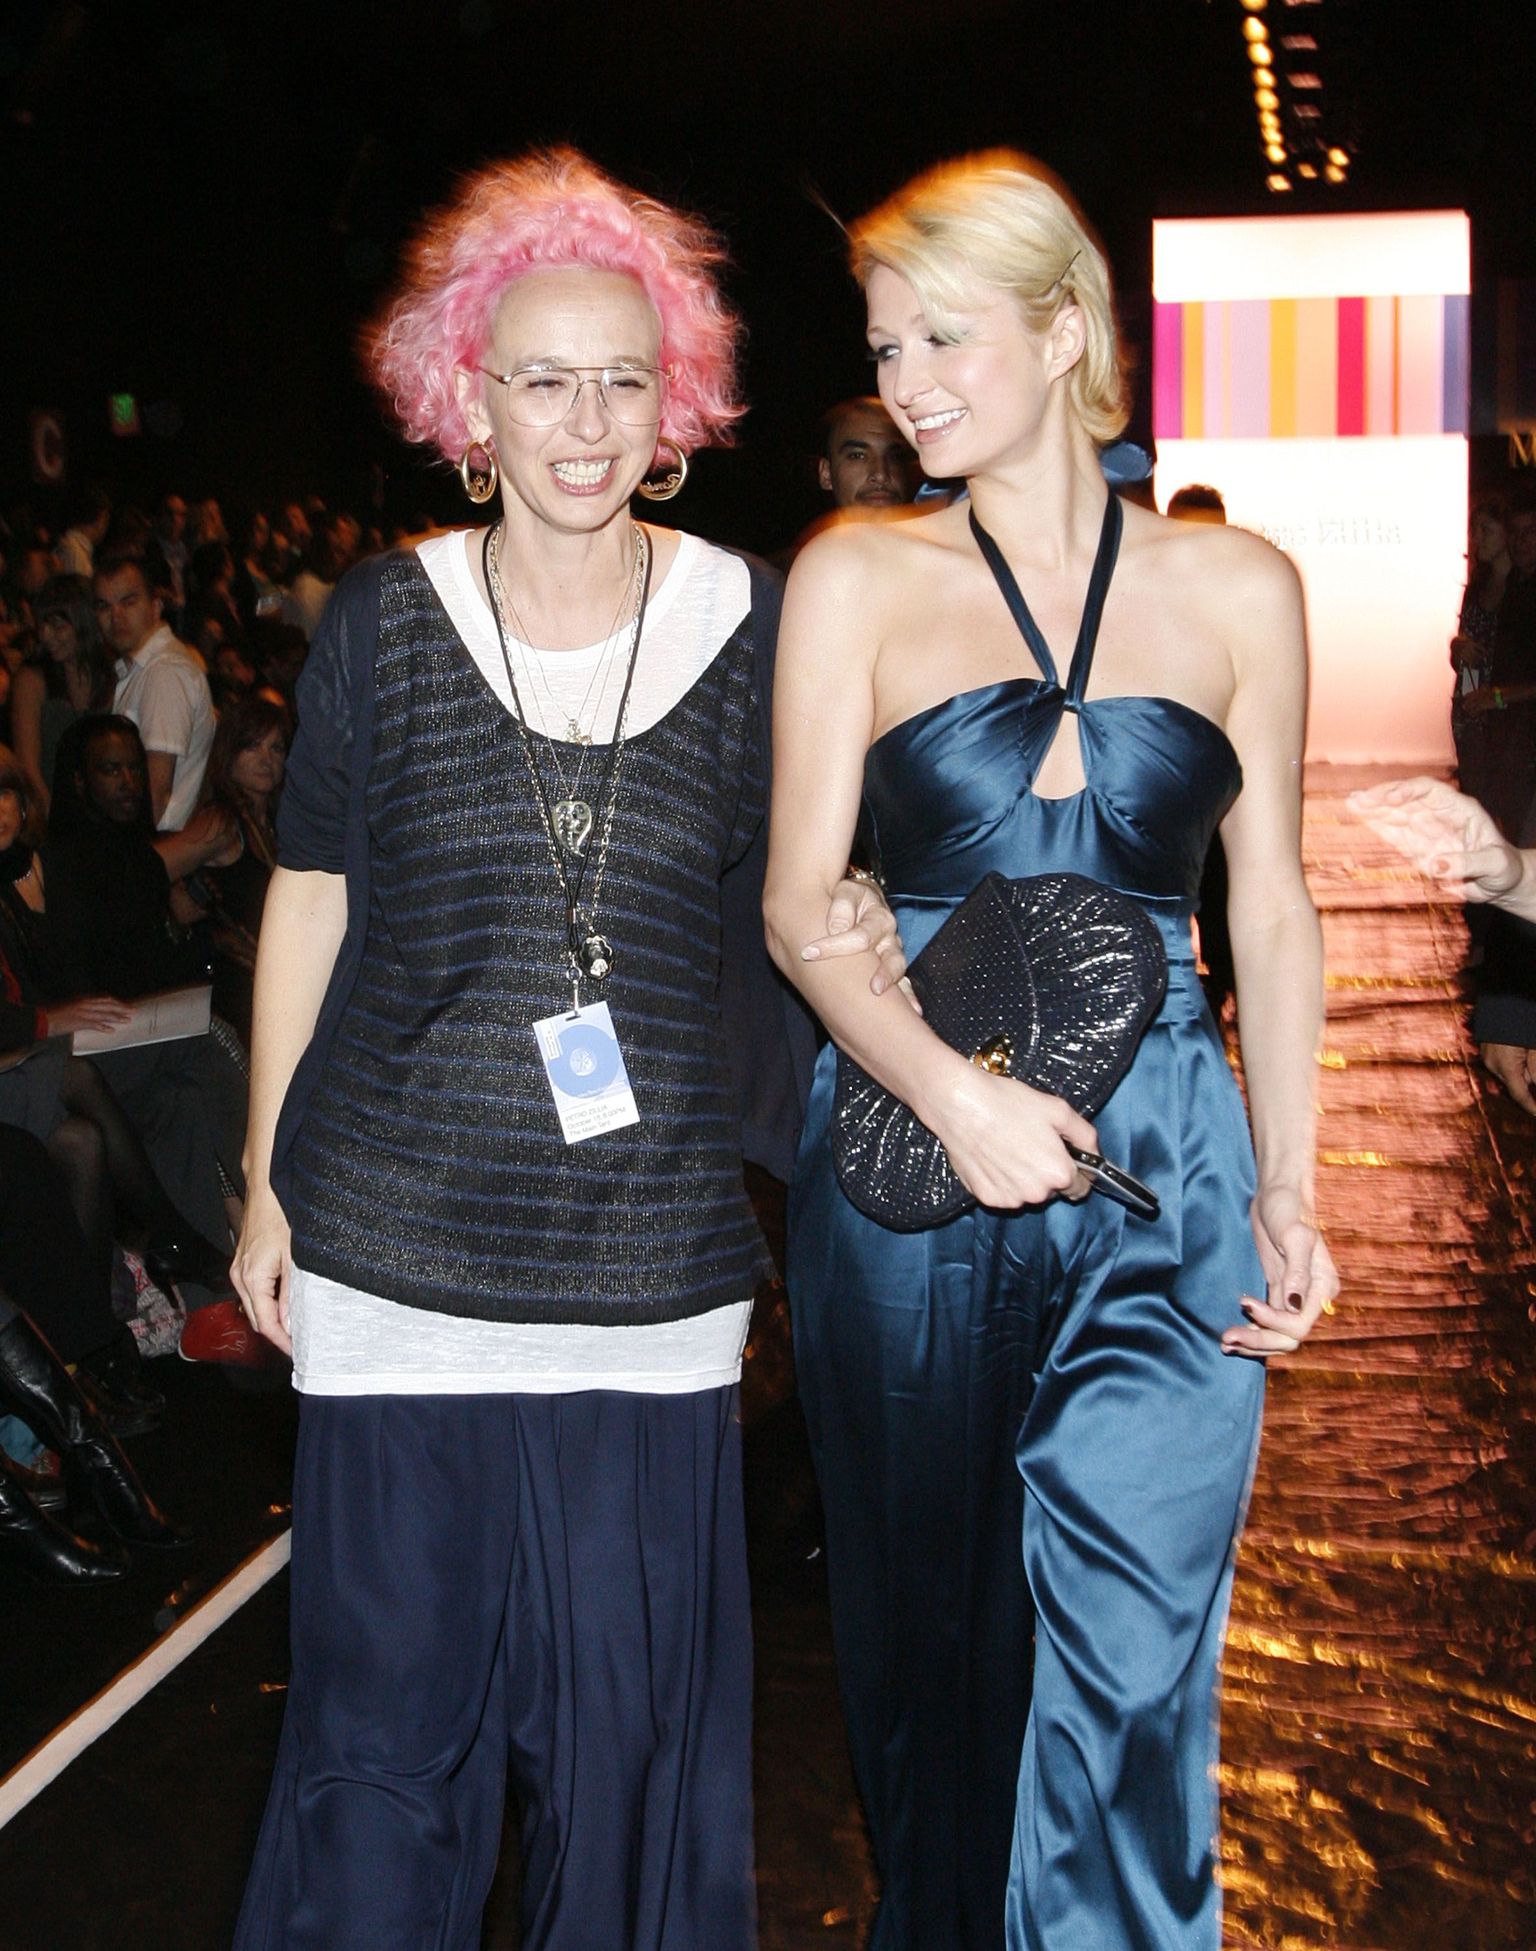 Nony Tochterman ja Paris Hilton Petro Zillia kevad 2008 moedemonstratsioonil